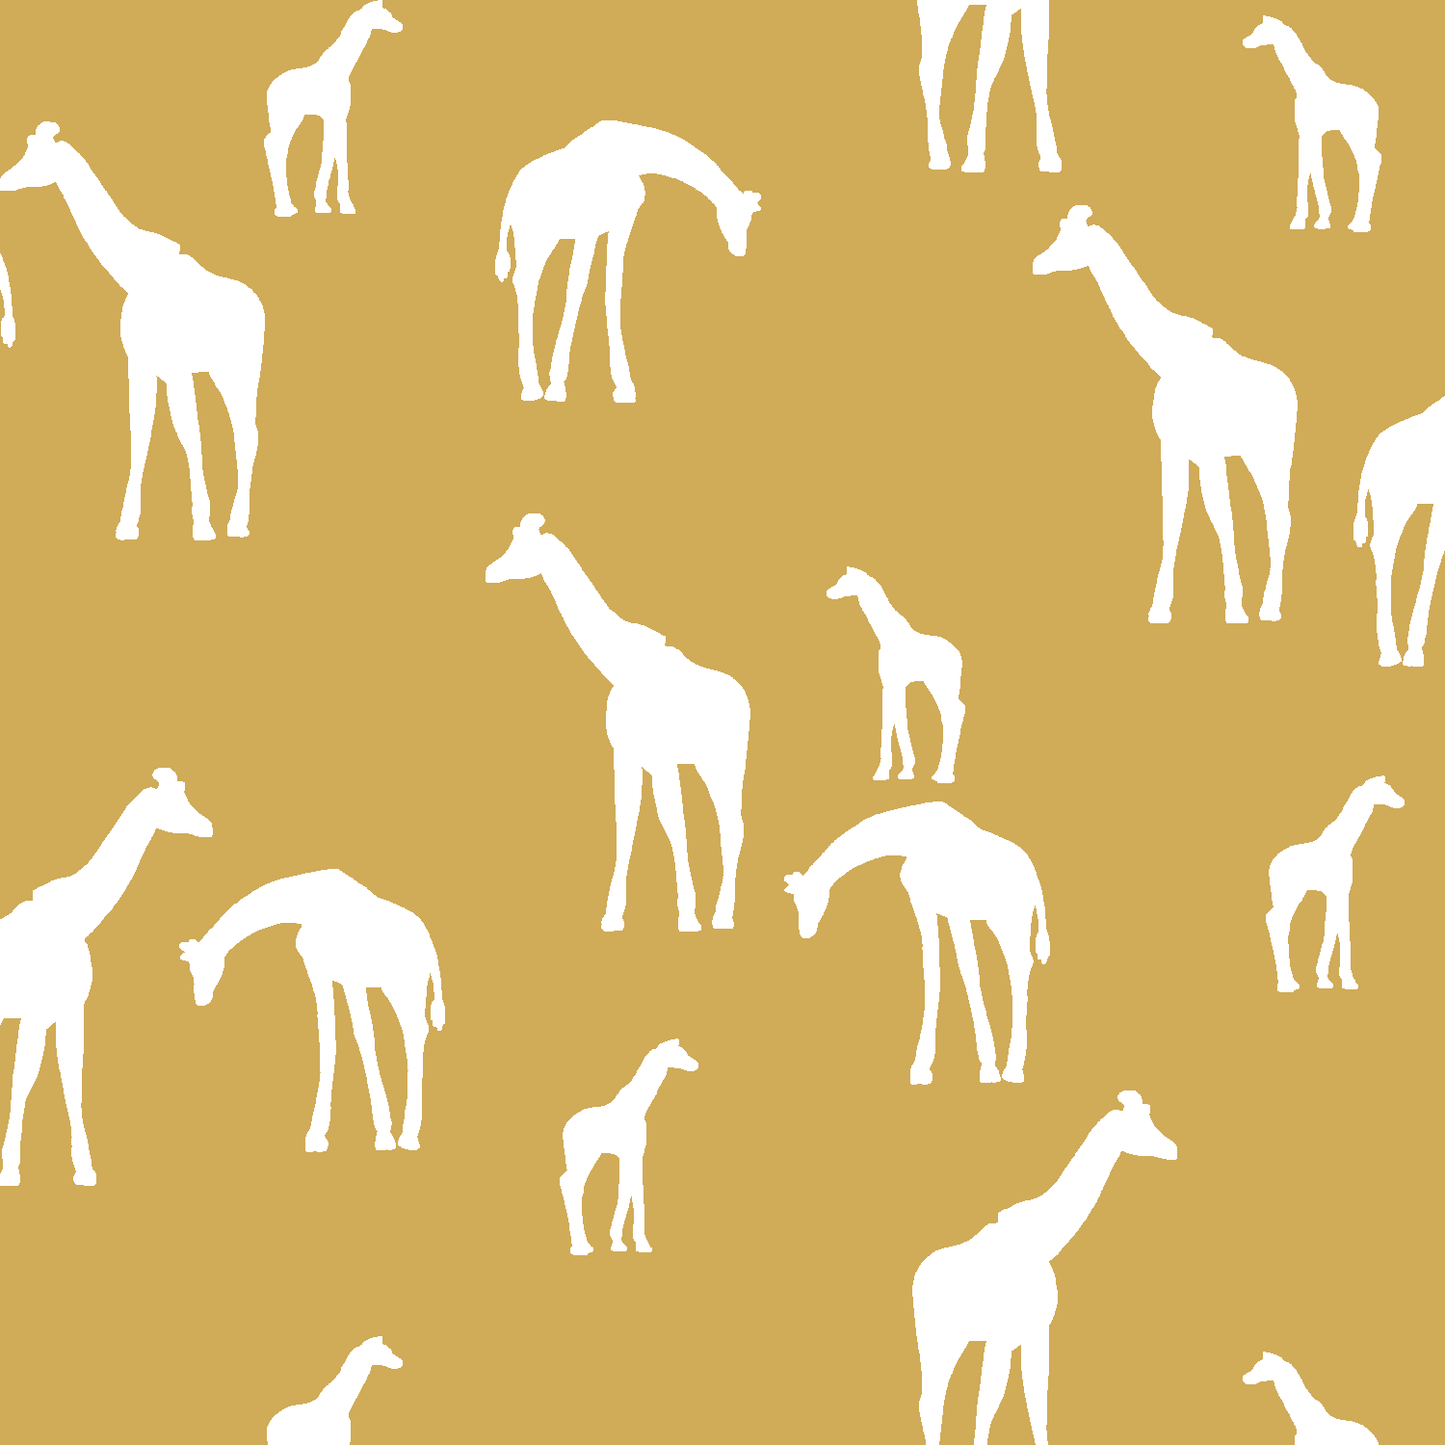 Giraffe Silhouette in Straw